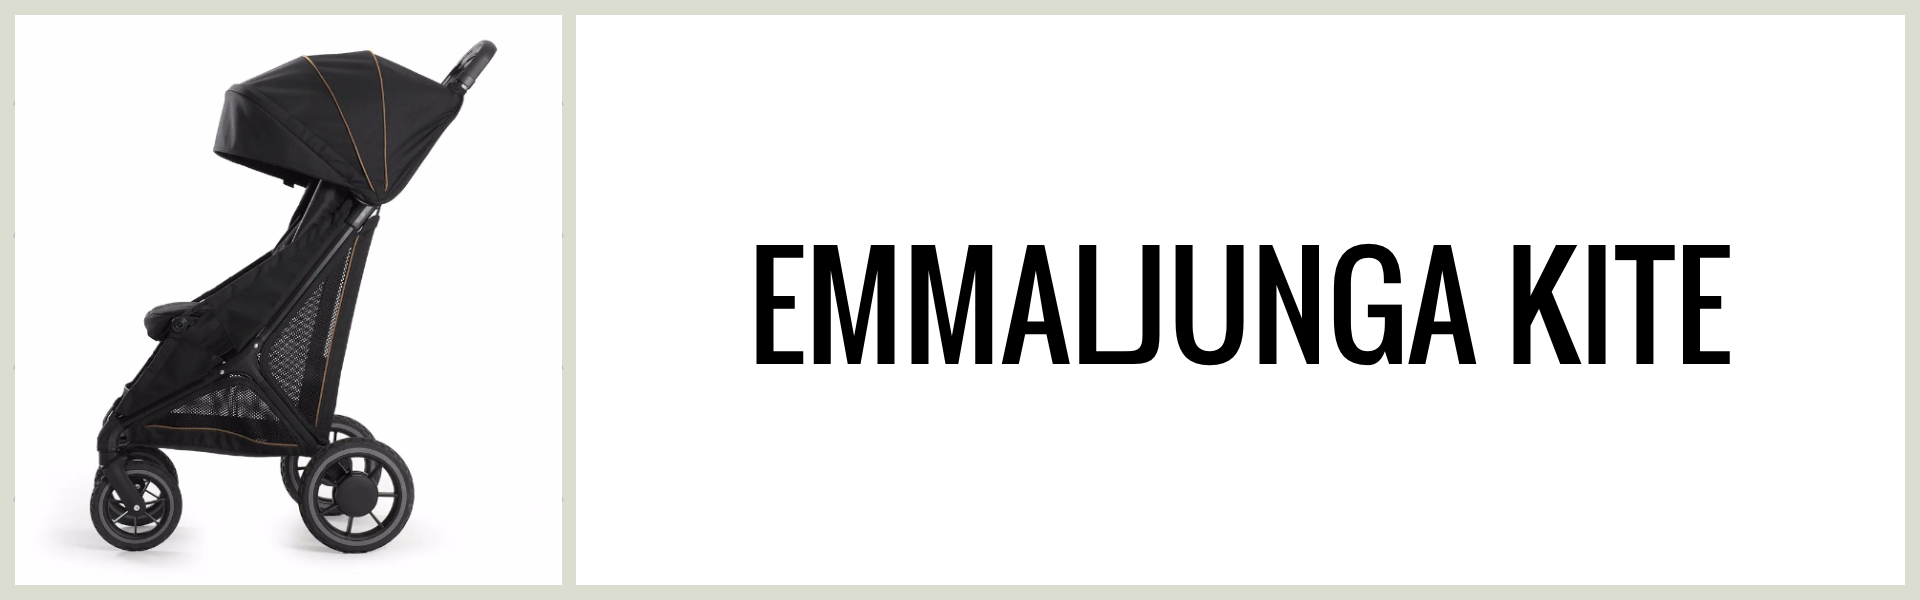 Omdöme: Hur är Emmaljunga Kite som resevagn?